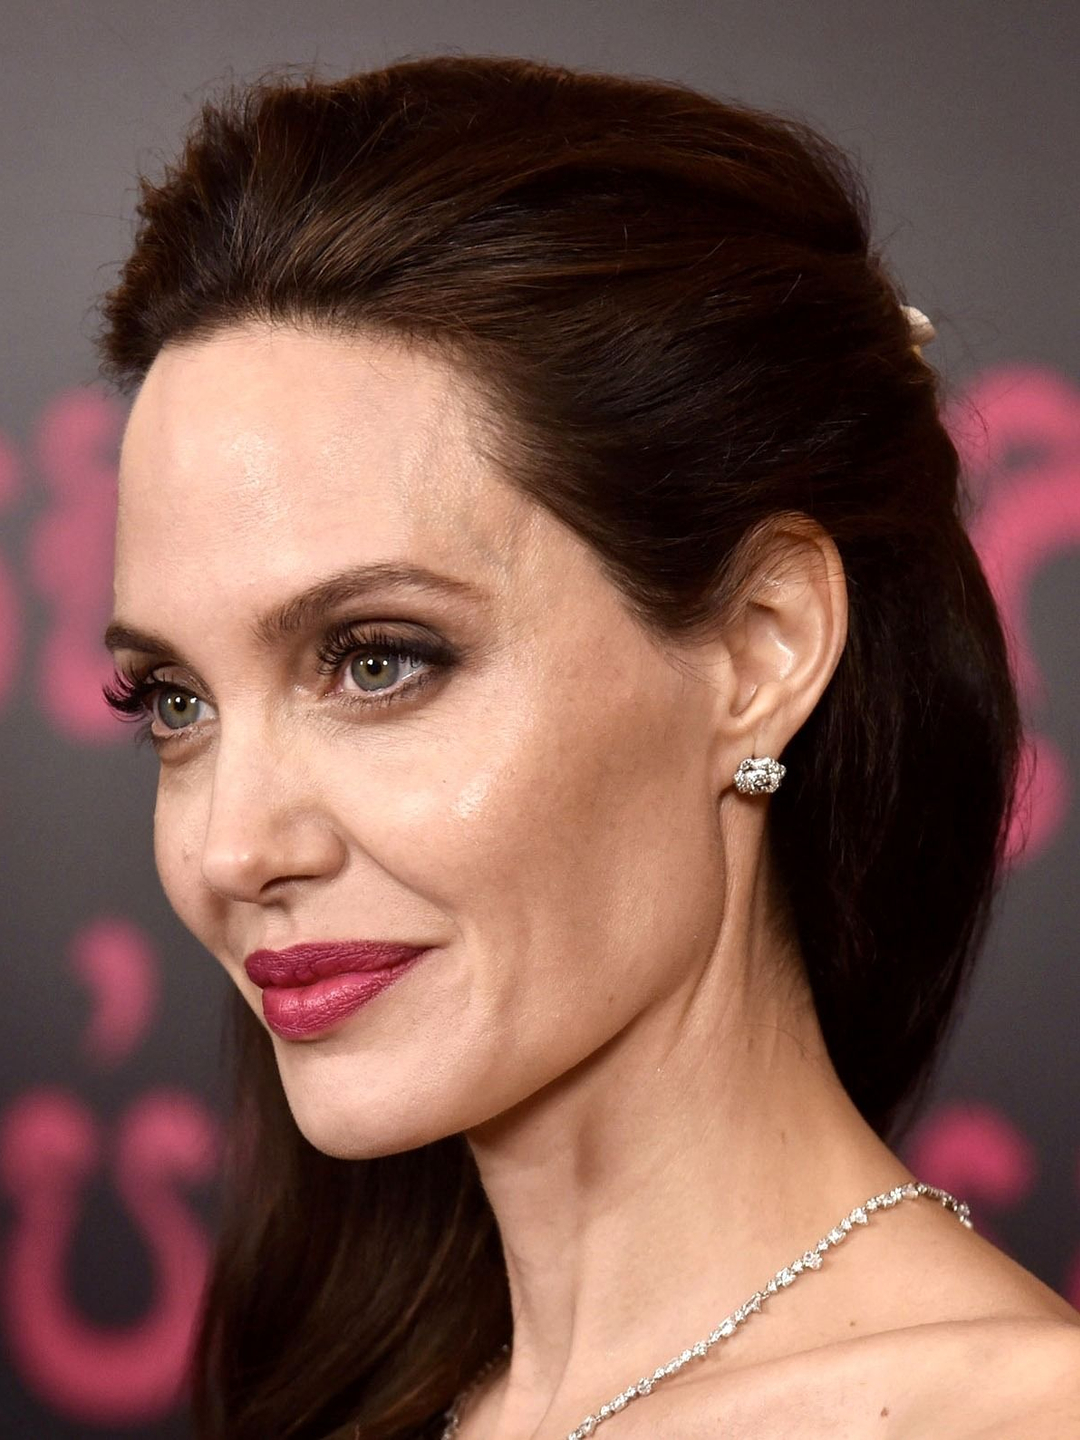 Angelina Jolie young pics